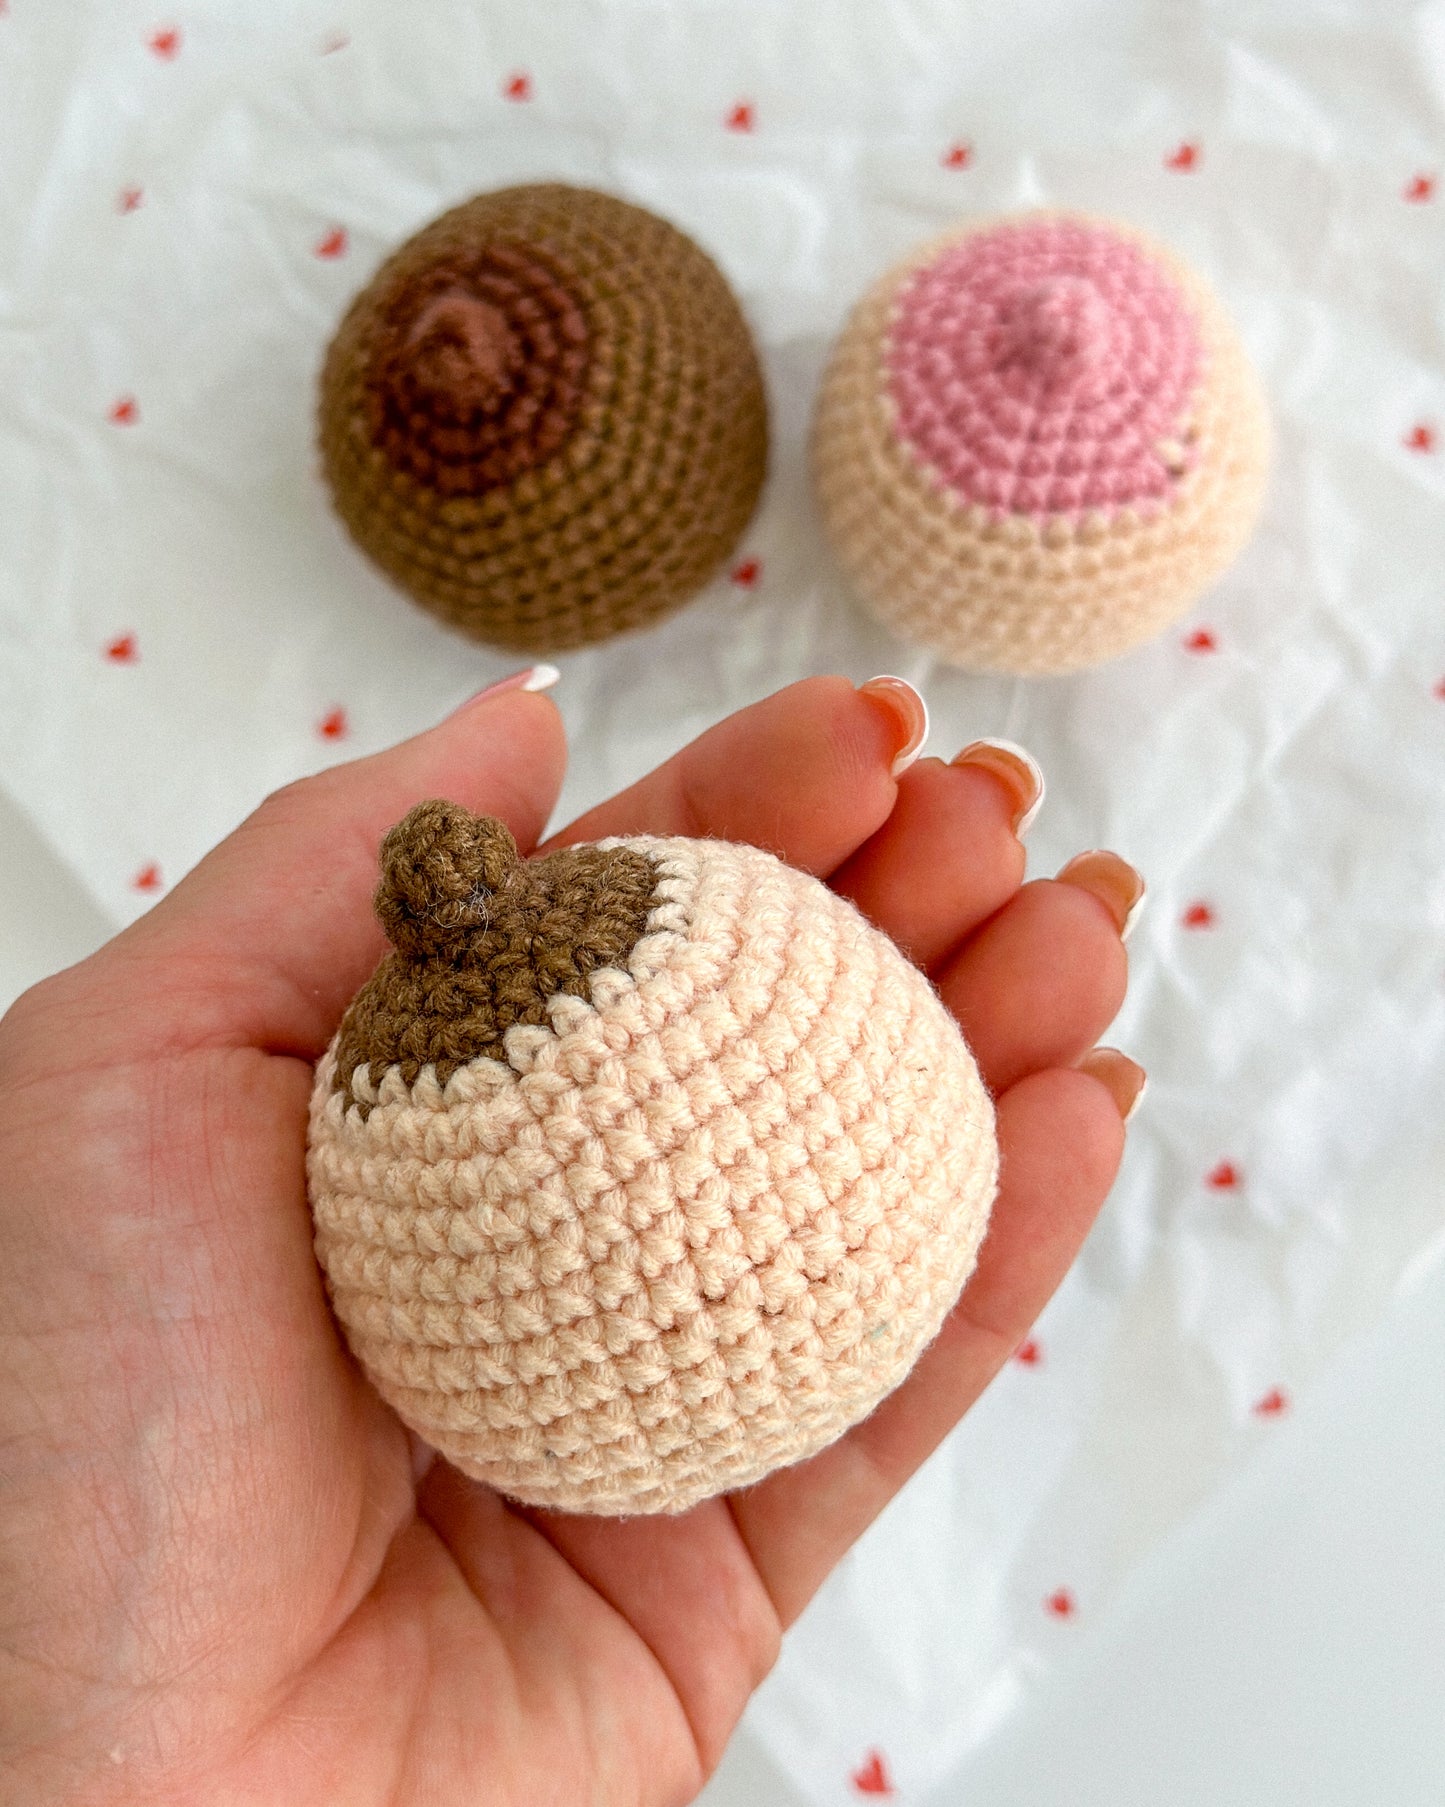 Crochet Breast |Handmade Valentine's crafts